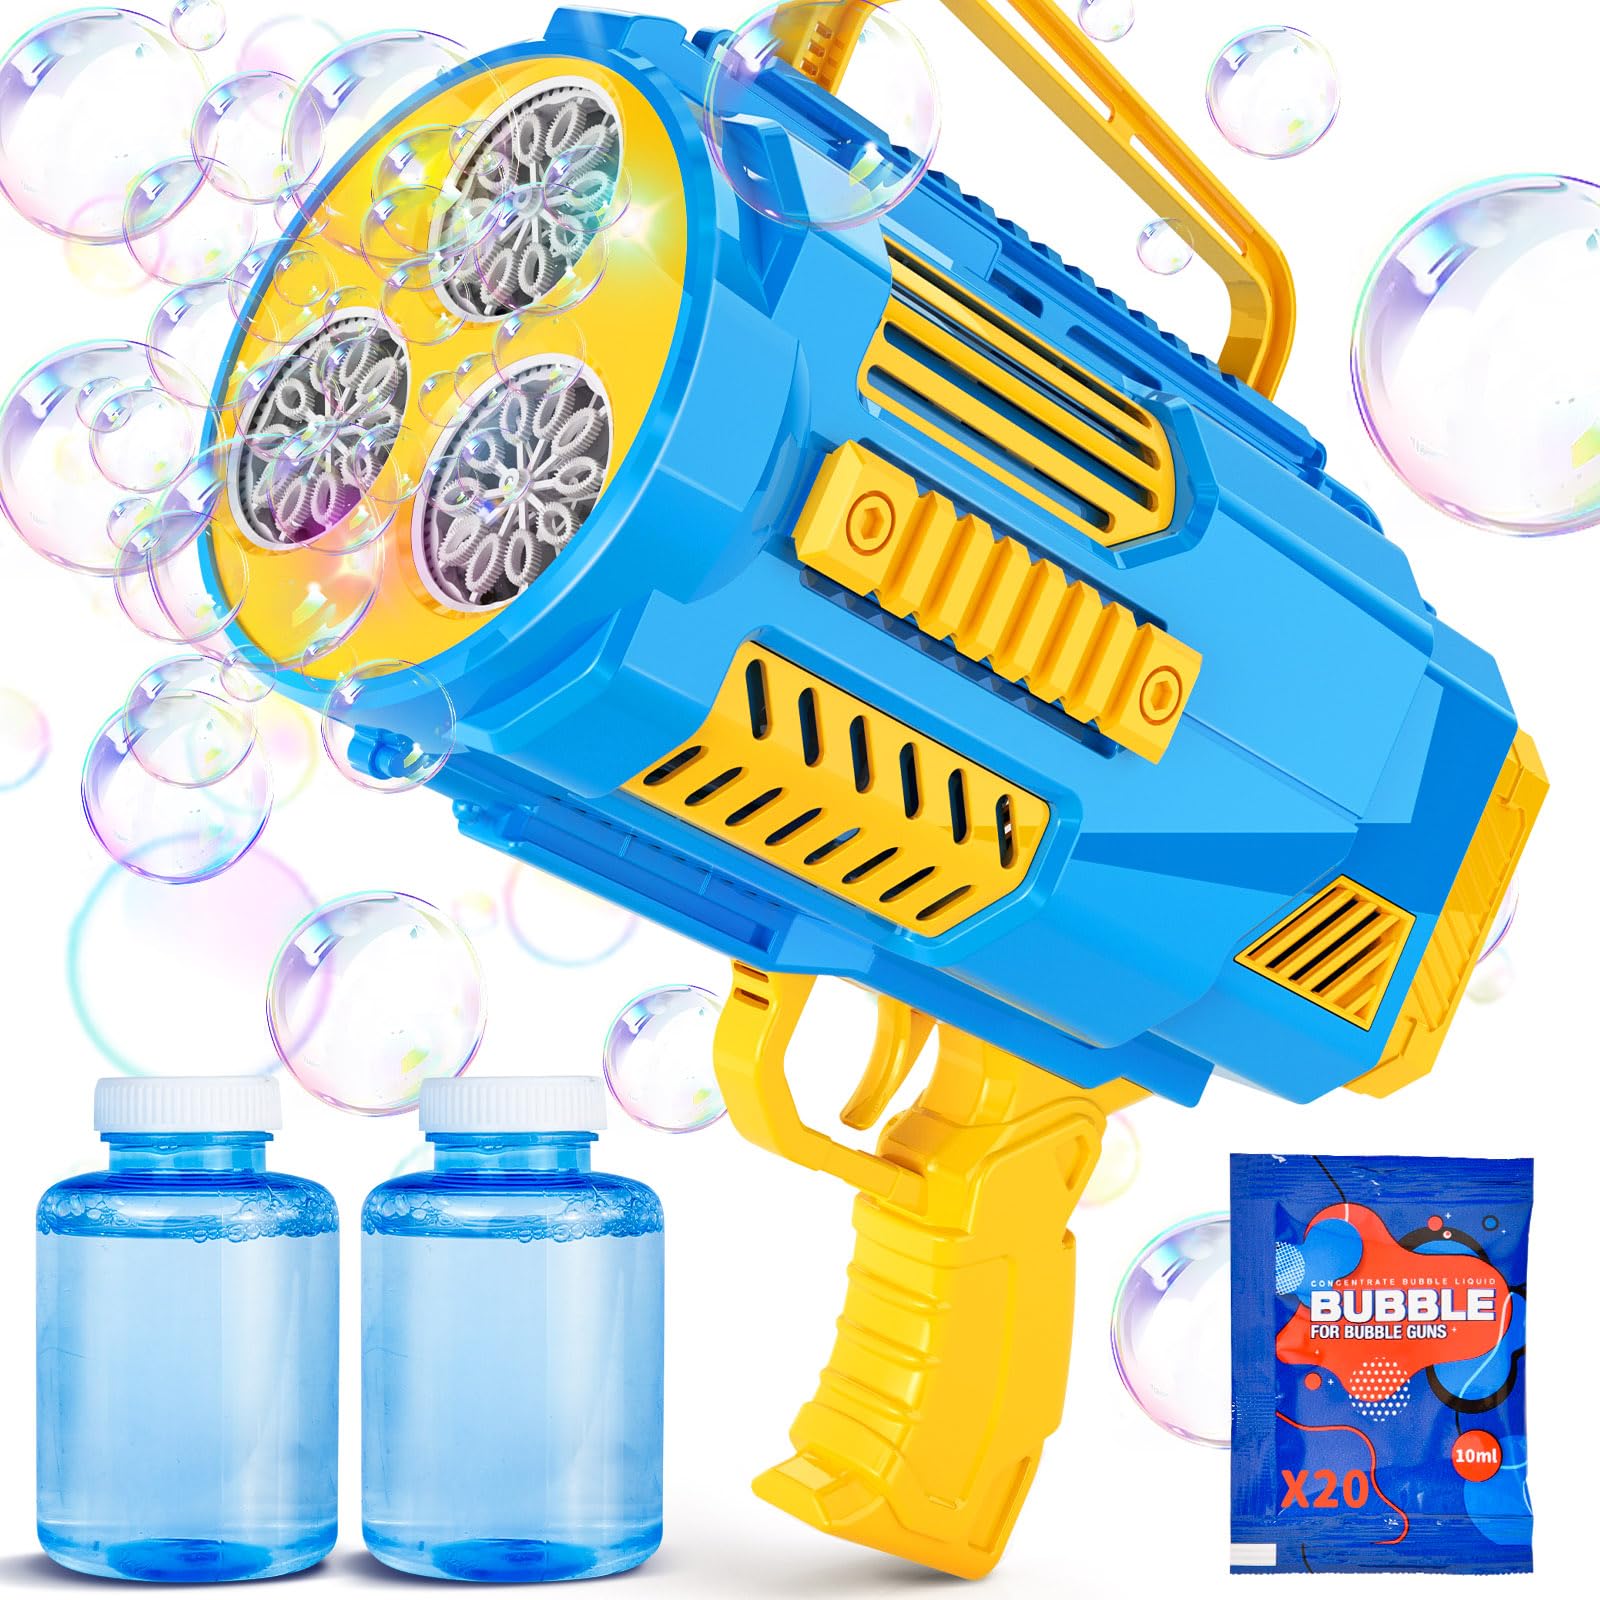 Pupu Pig Bubble Gun (No Dip) Automatic Bubble Machine with Lights & Built-in Bubble Solution, Bubble Blower Toys for 3 4 5 6 7 8